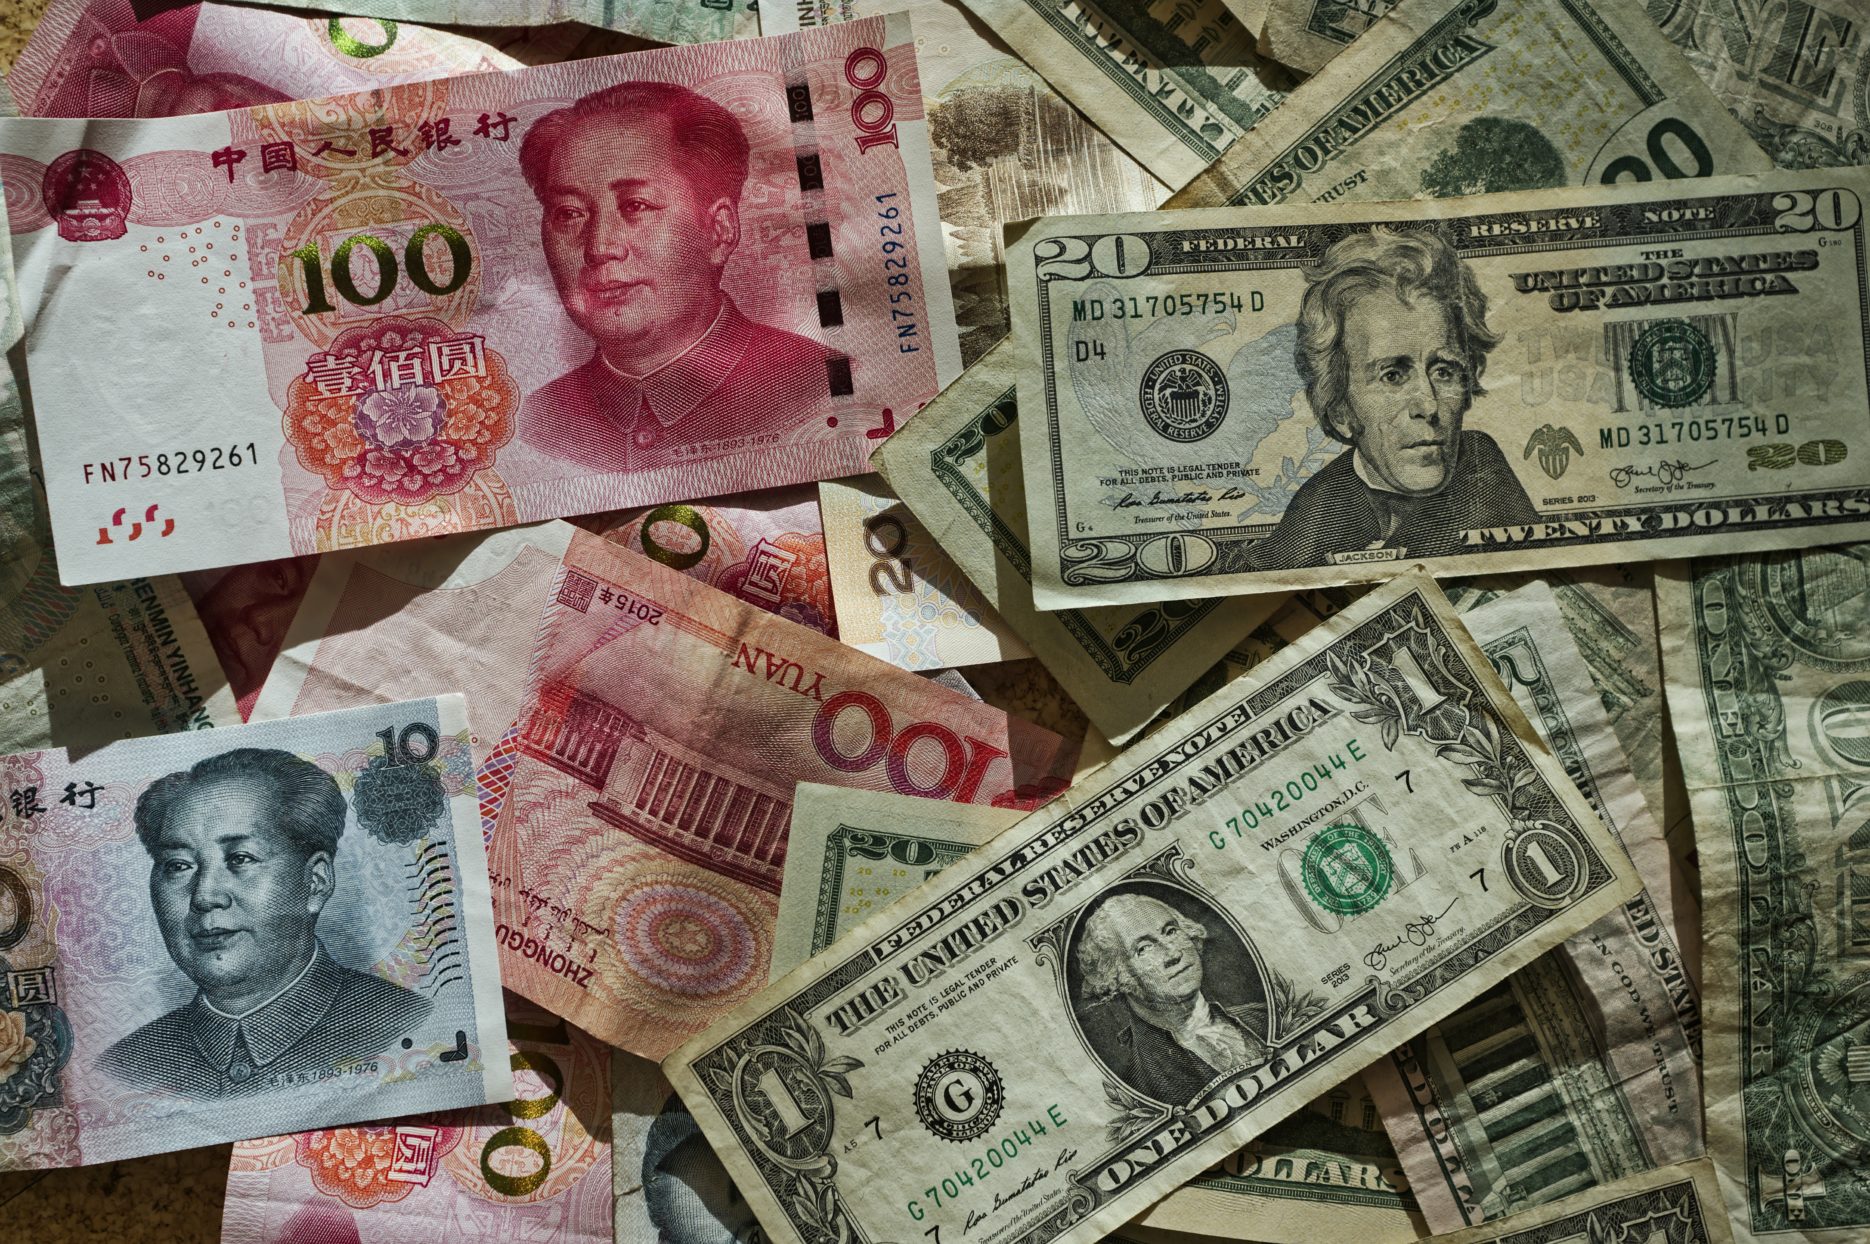 RMB notes